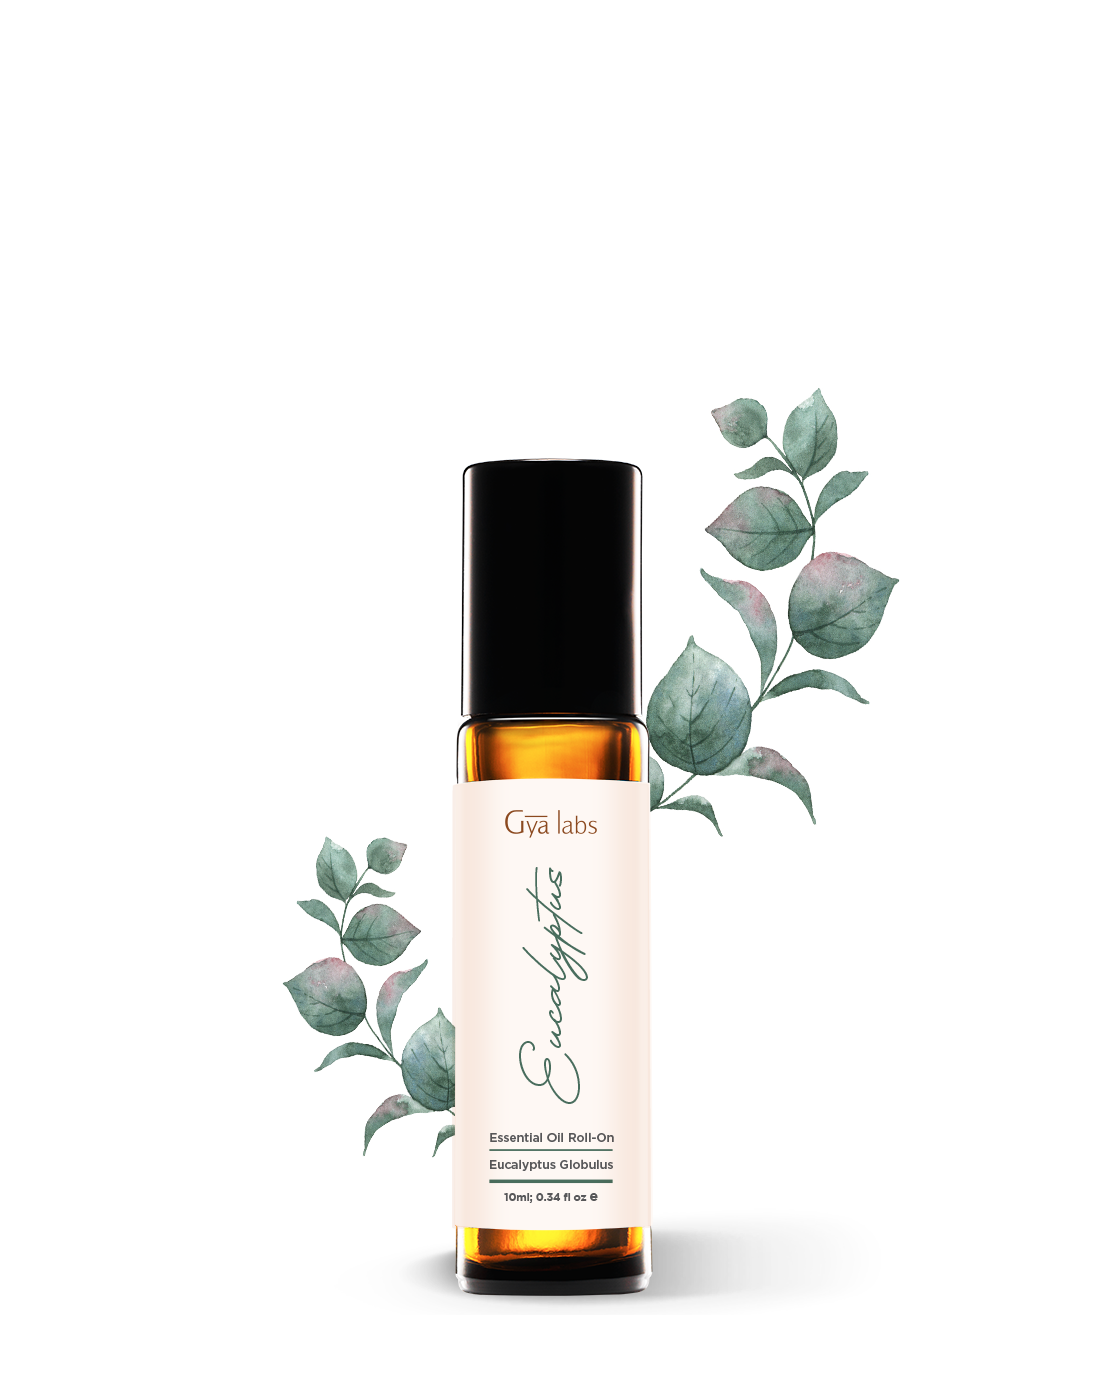 eucalyptus roll on essential oil with eucalyptus plant